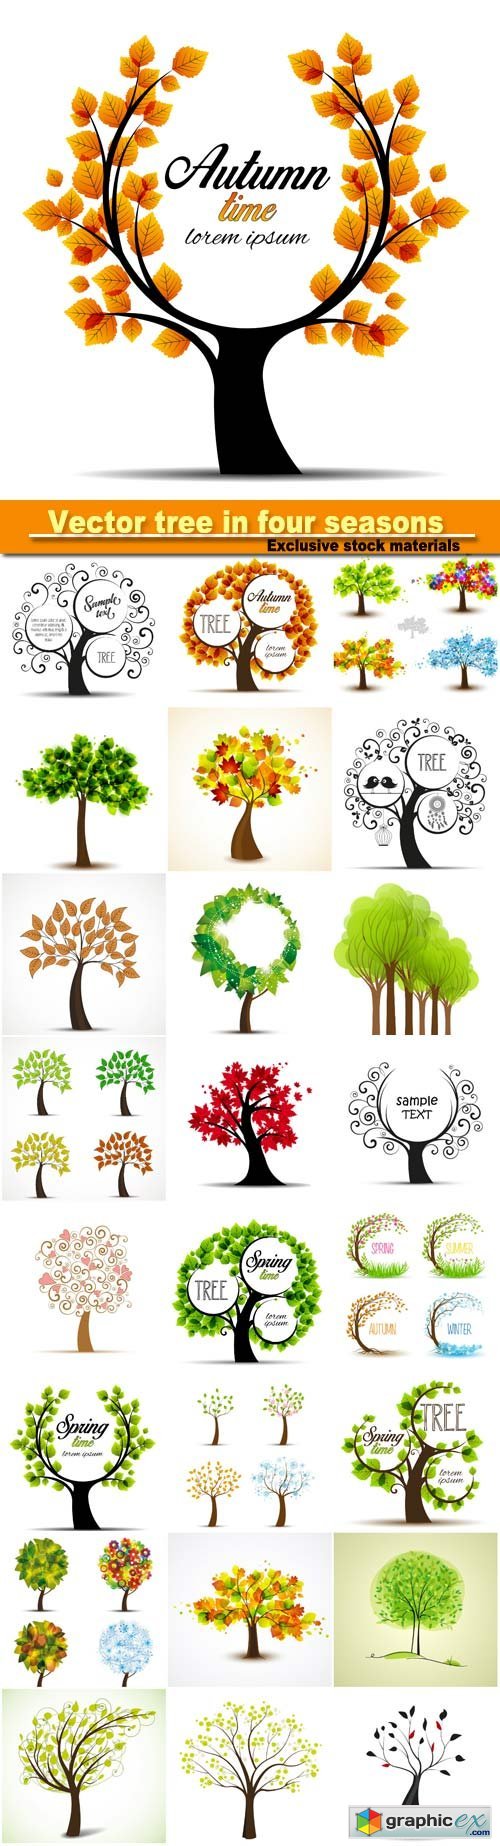 Tree in four seasons - spring, summer, autumn, winter